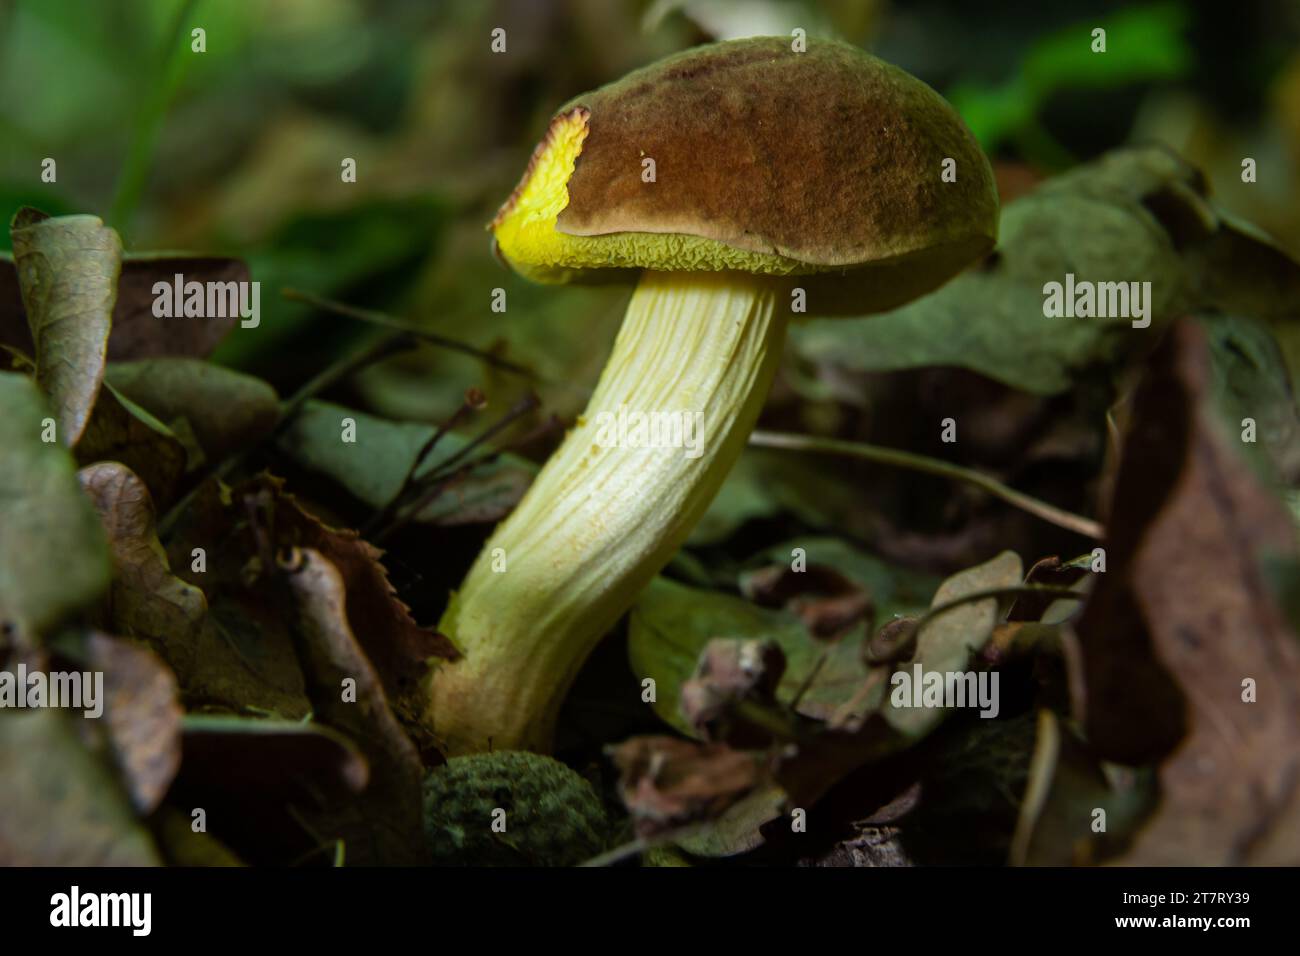 Mushroom Xerocomus subtomentosus, commonly known as suede bolete, brown and yellow bolet, boring brown bolete or yellow-cracked bolete in forest in th Stock Photo